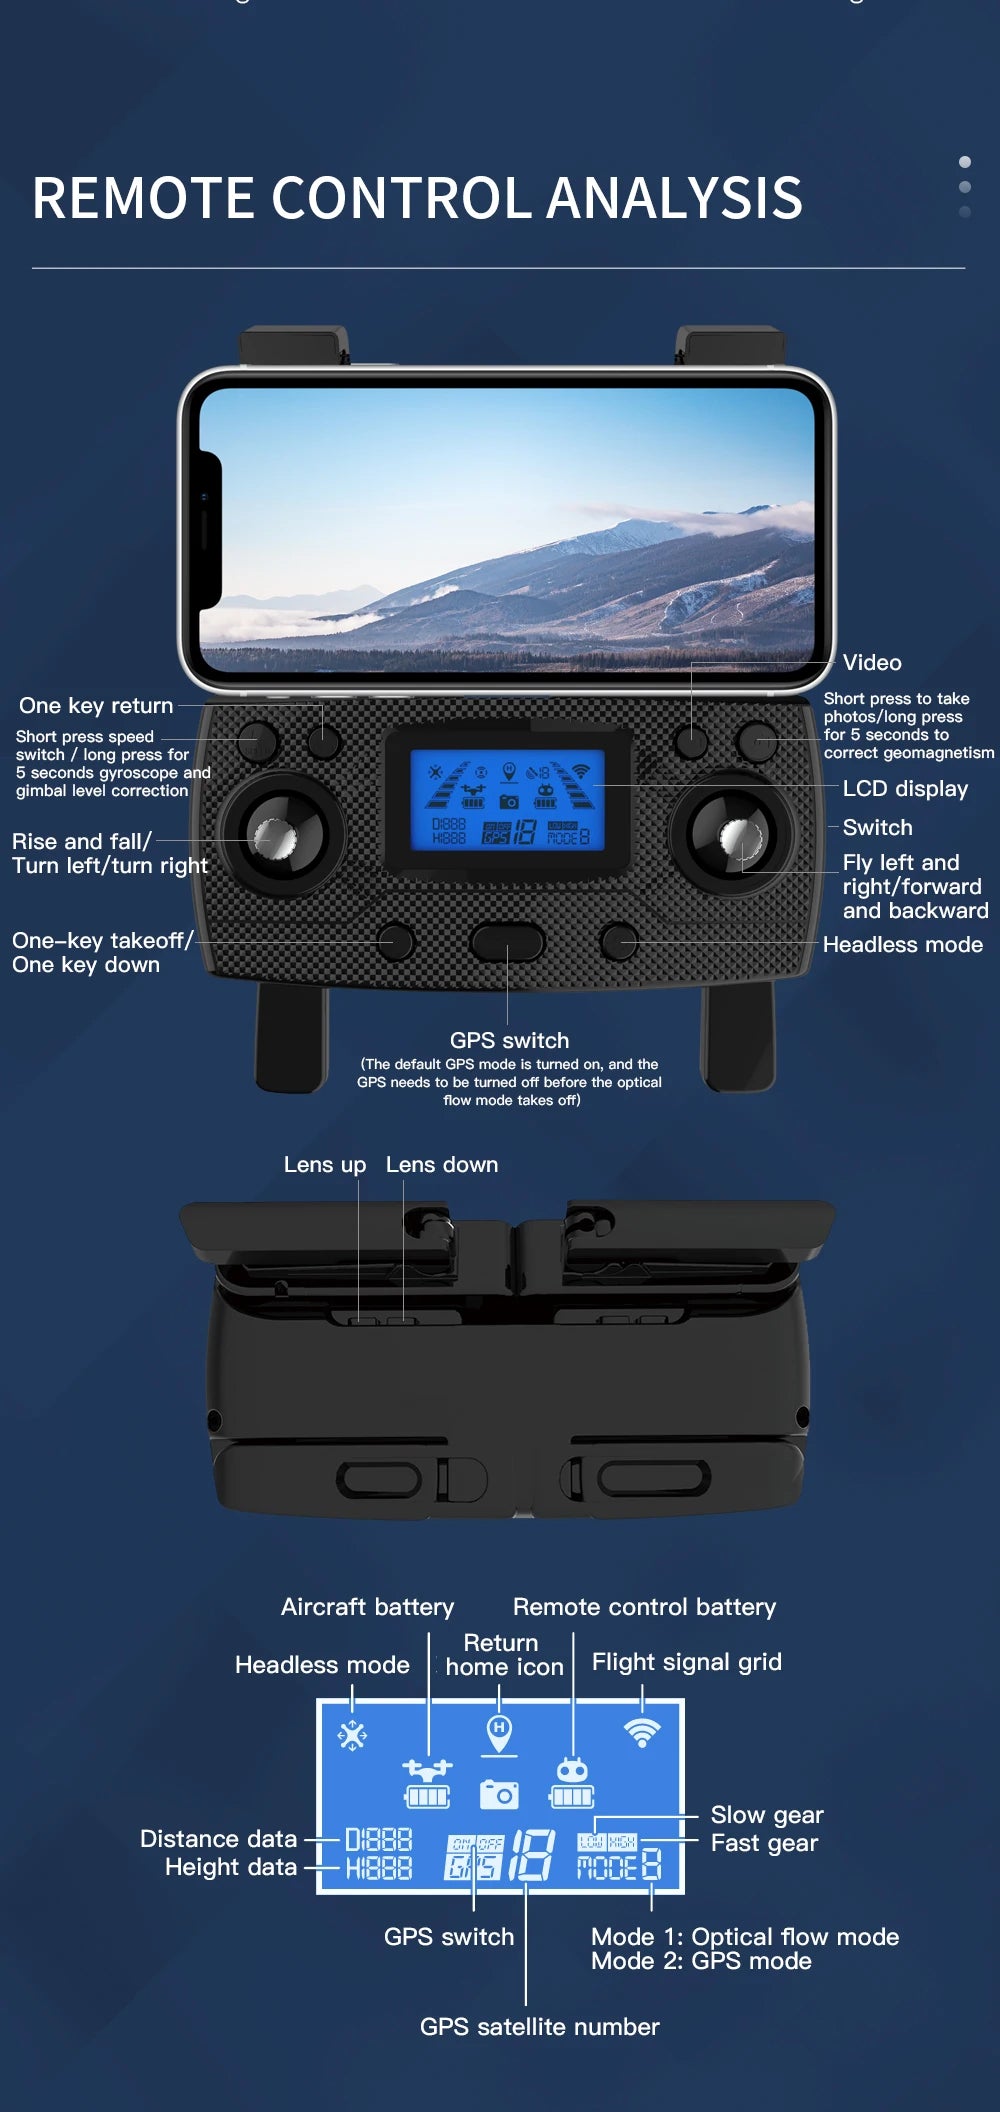 SG907 MAX GPS Drone, gyroscope 54B gimbal level correction LCD display Rise and fall